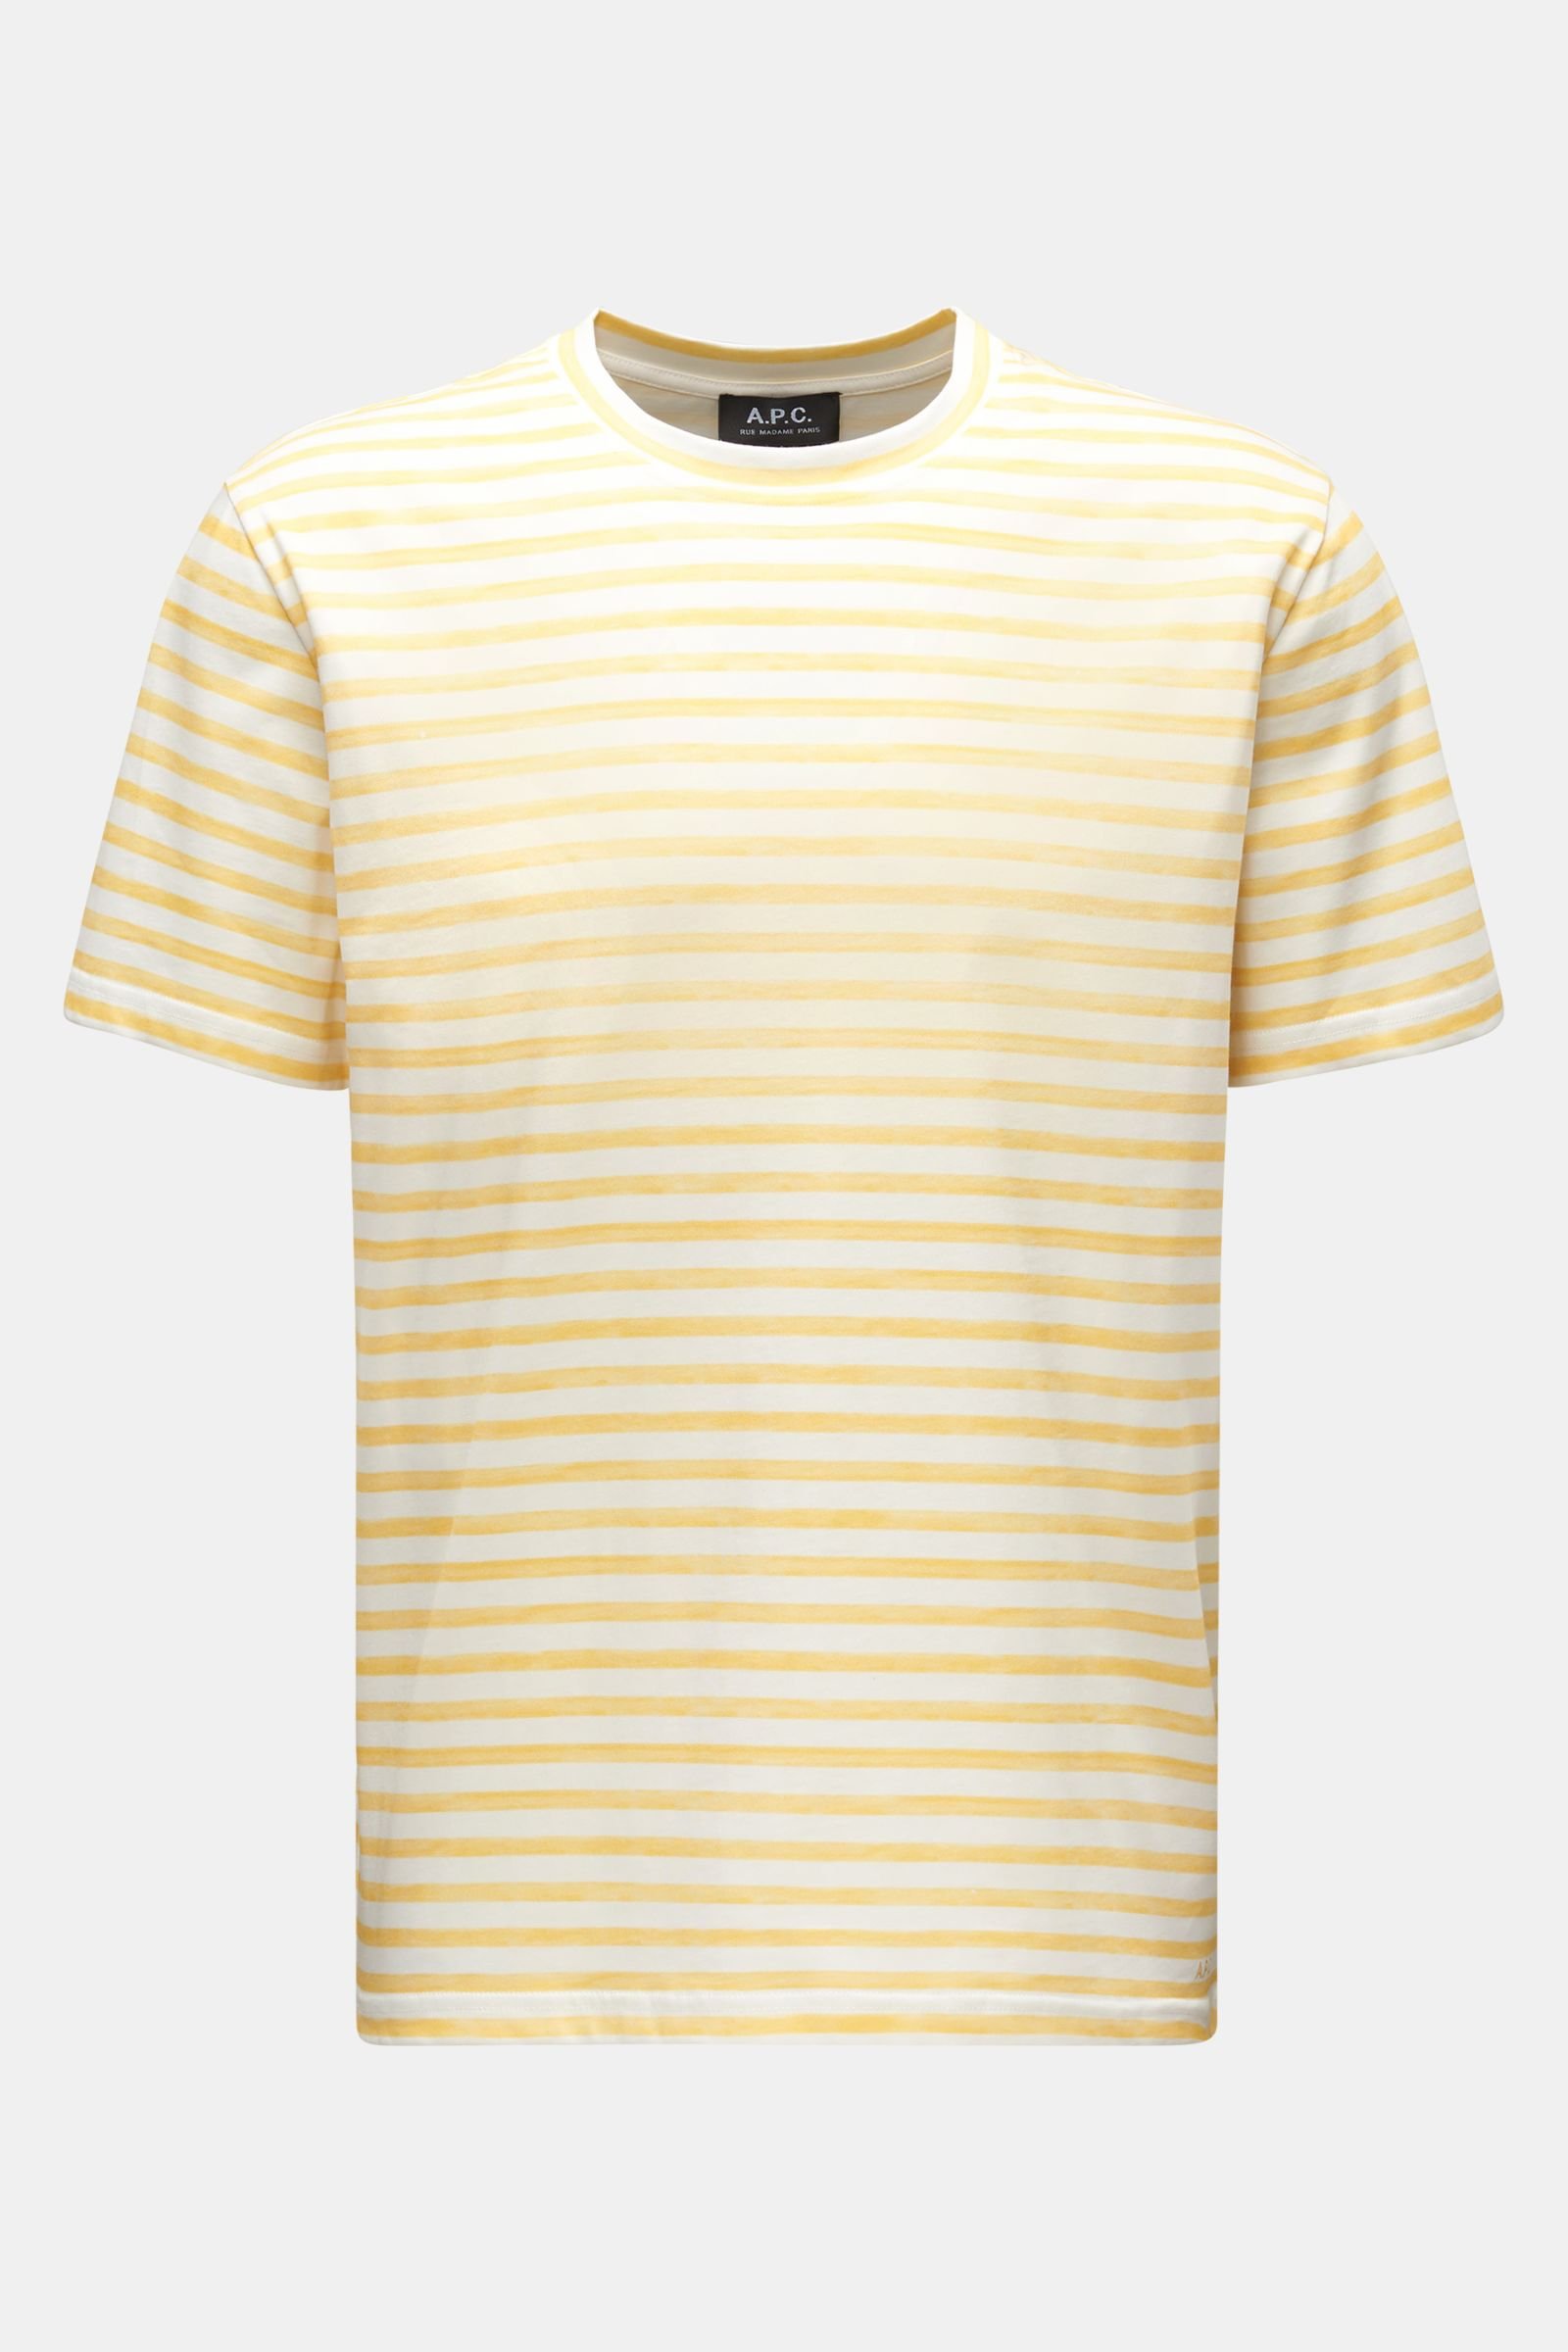 Crew neck T-shirt 'Marinheiro' yellow/white striped